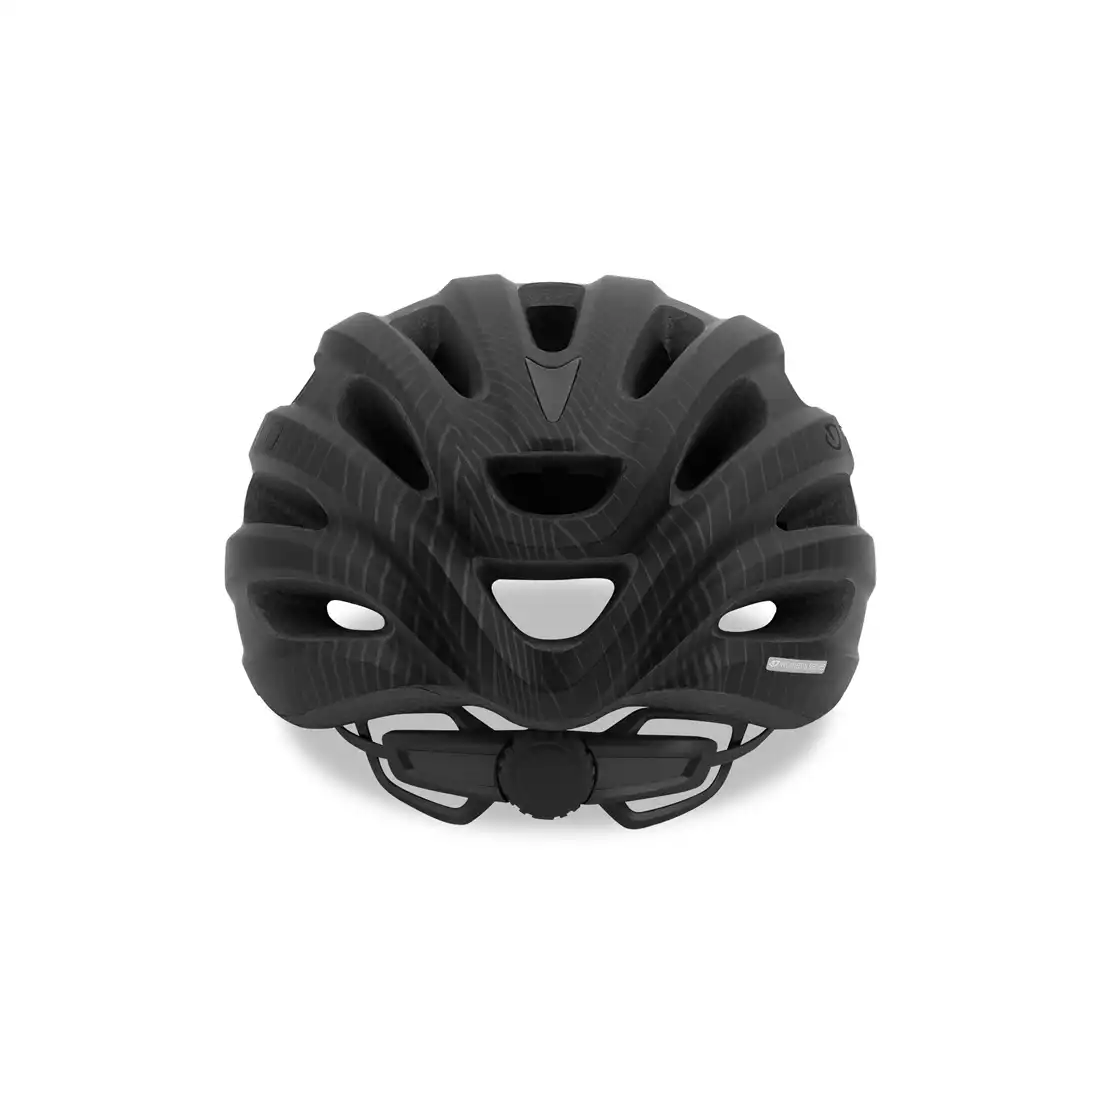 Bicycle helmet GIRO VASONA INTEGRATED MIPS matte black 